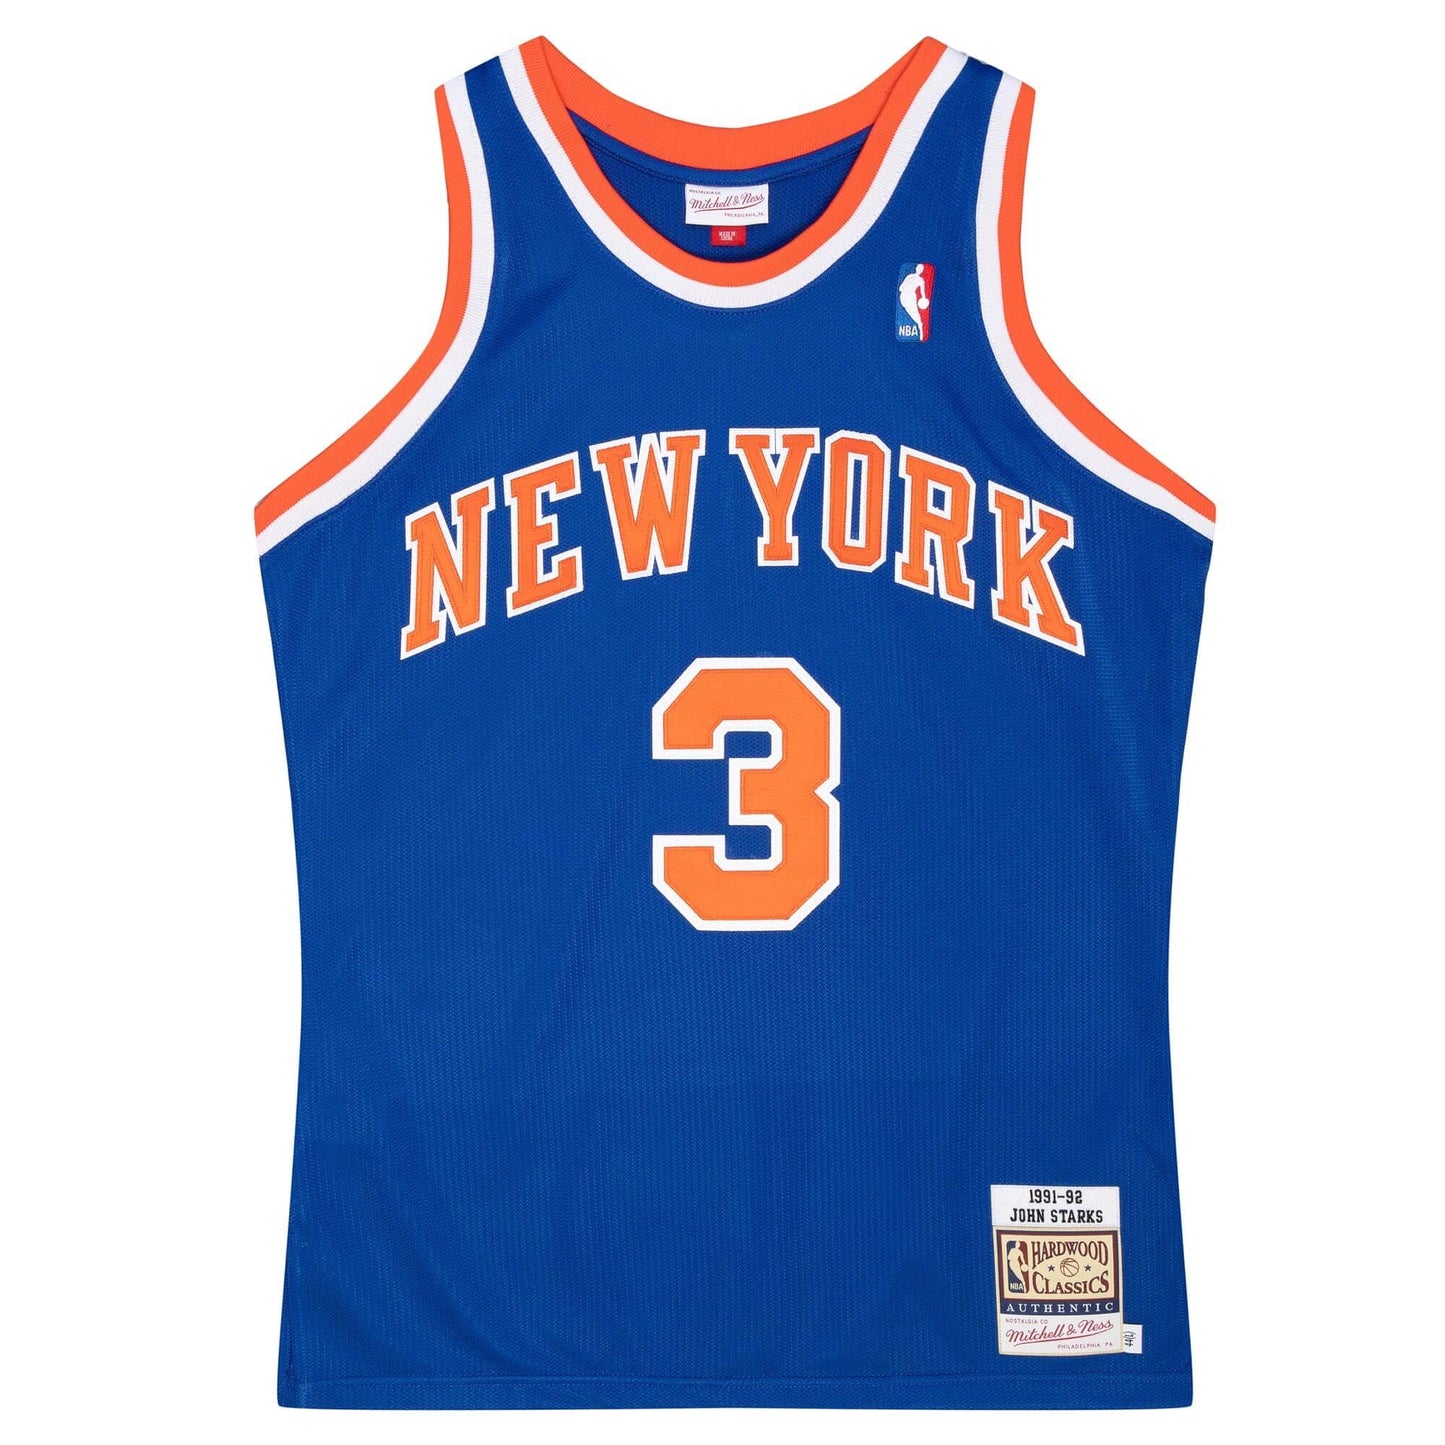 Authentic John Starks New York Knicks 1991-92 Jersey